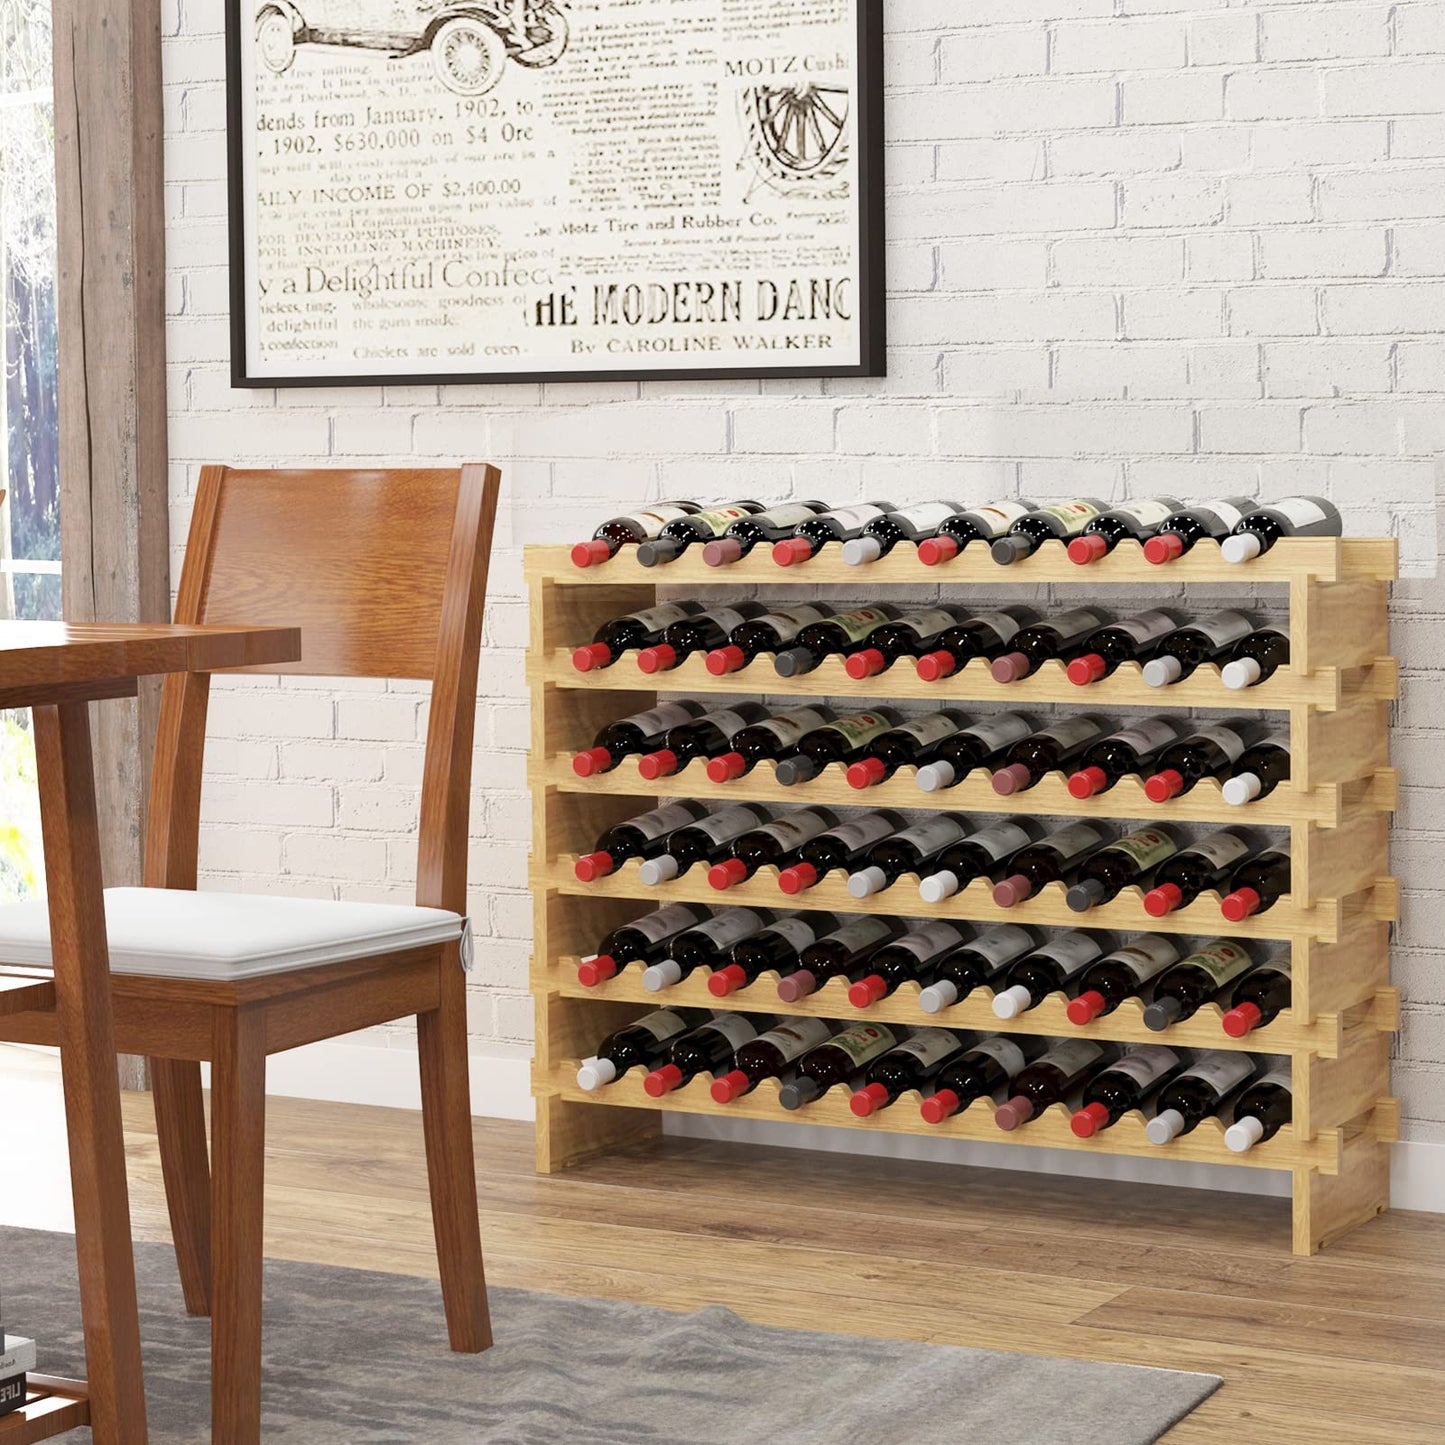 SogesHome Wine Rack Wood Storage Rack Stand, 60 Bottles Holder, 6 Tier Stack-able Wine Storage Organizer Free Standing